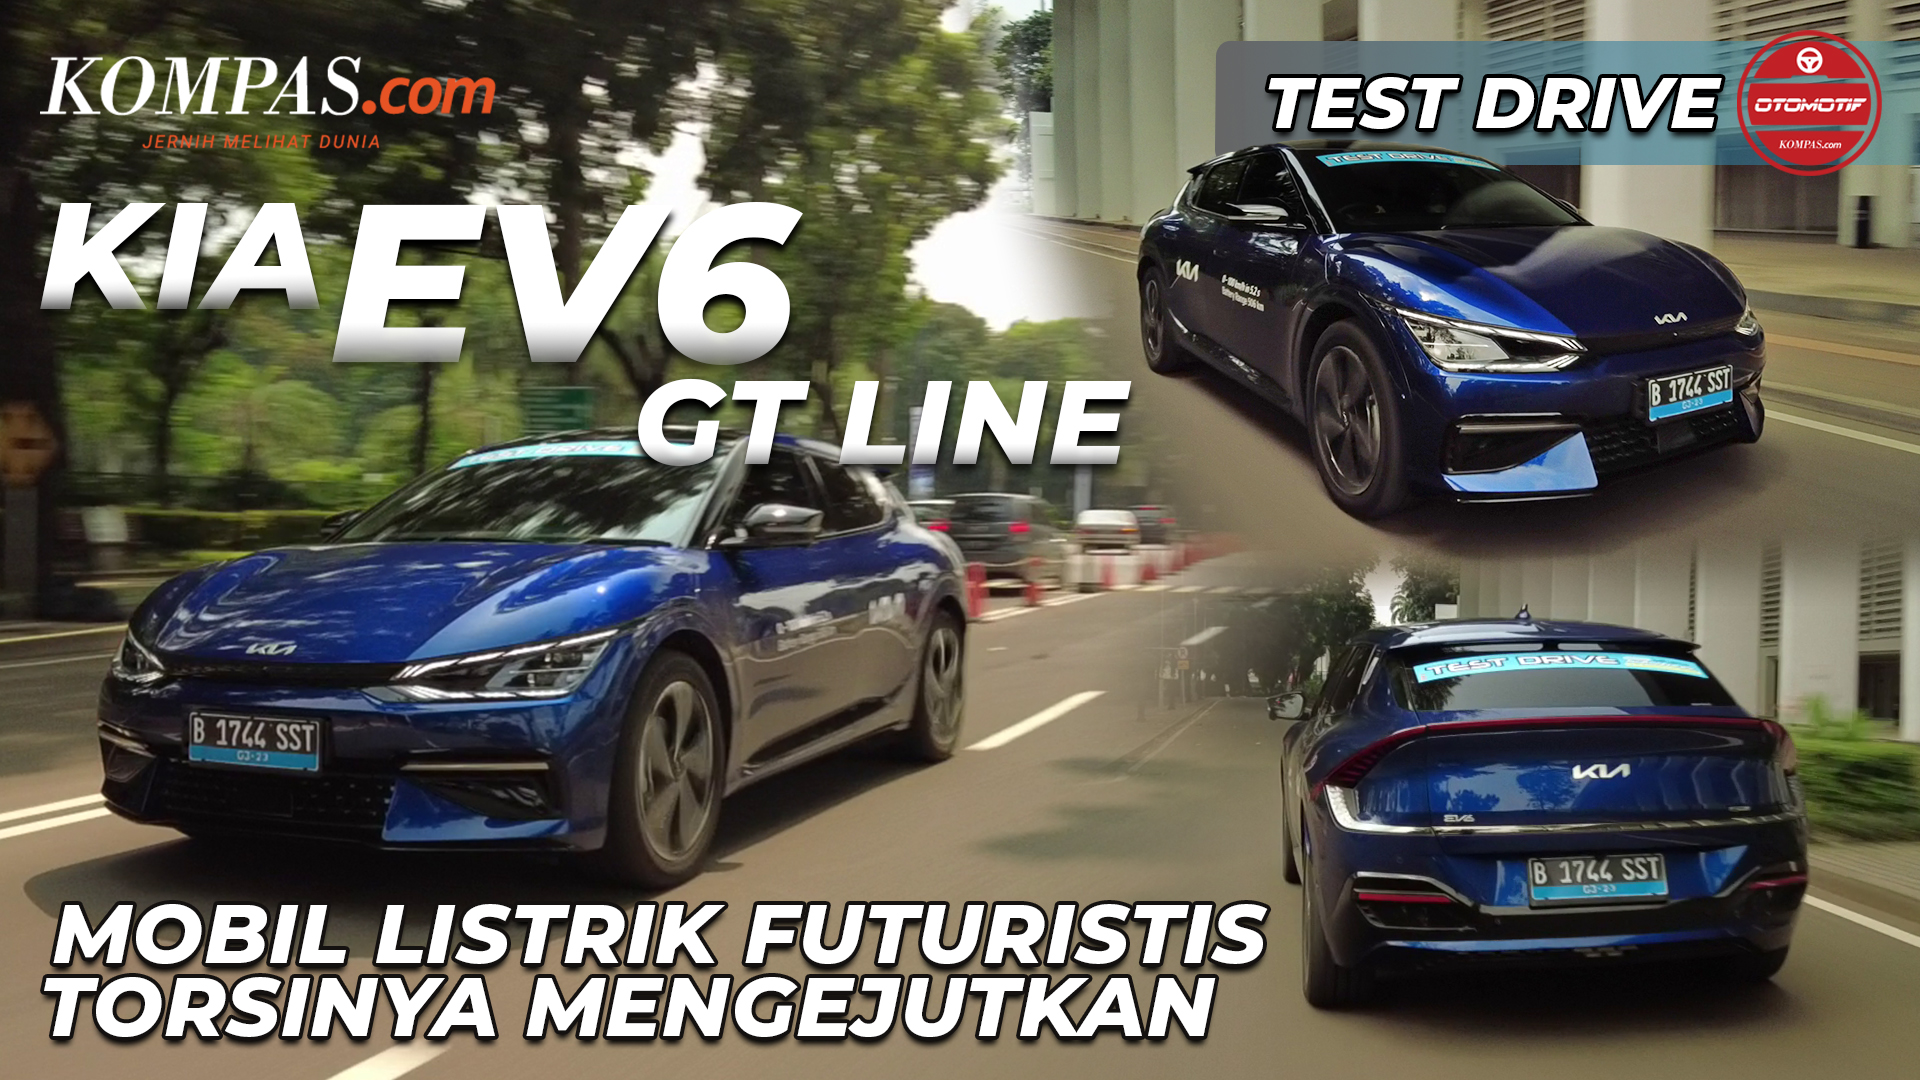 TEST DRIVE | Kia EV6 GTLine | Mobil Listrik Futuristis Dengan Torsi Mengejutkan